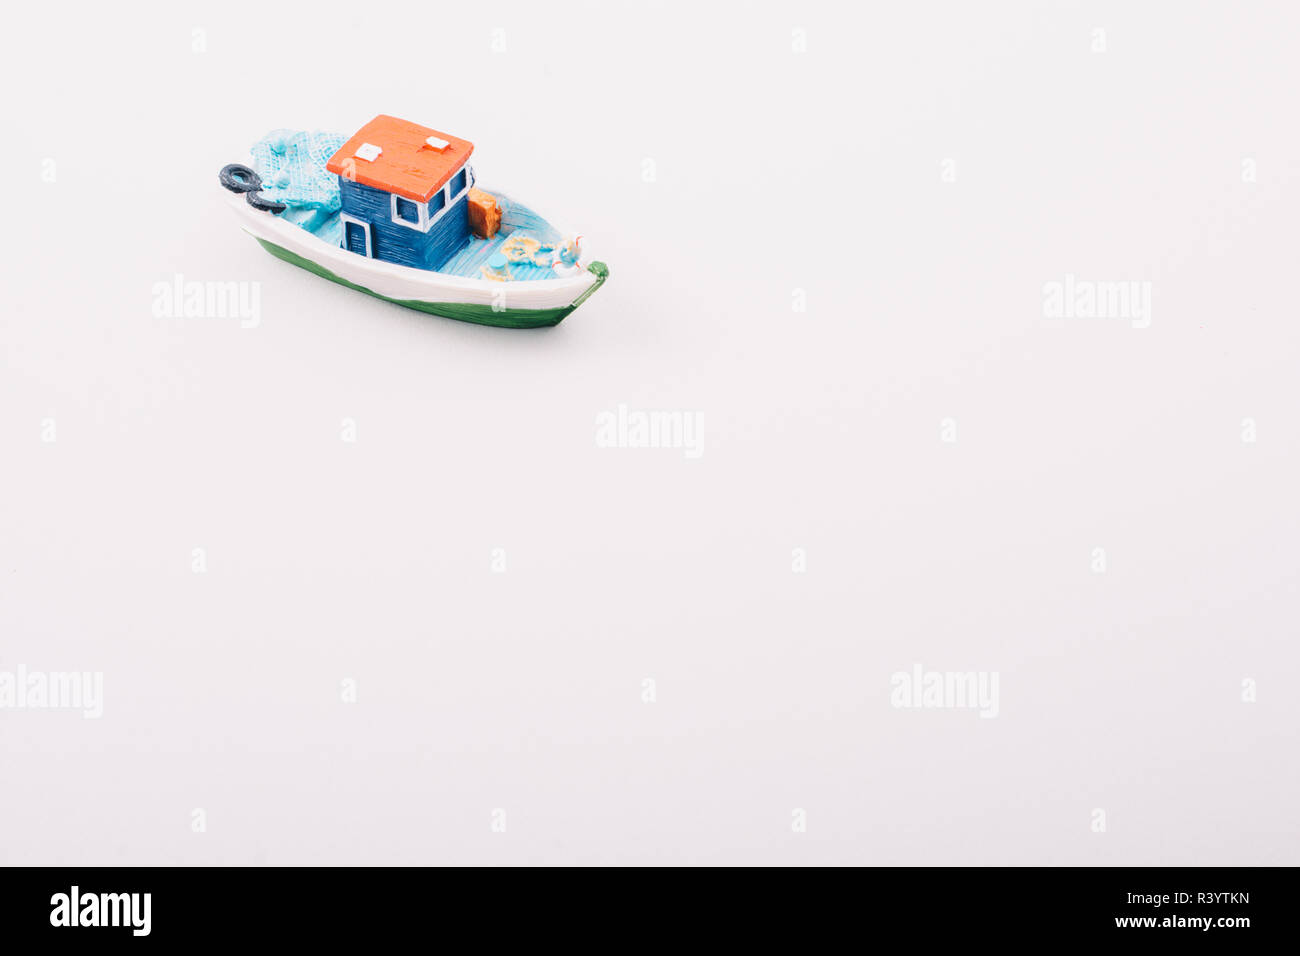 https://c8.alamy.com/comp/R3YTKN/little-colorful-model-fishing-boat-placed-on-white-R3YTKN.jpg